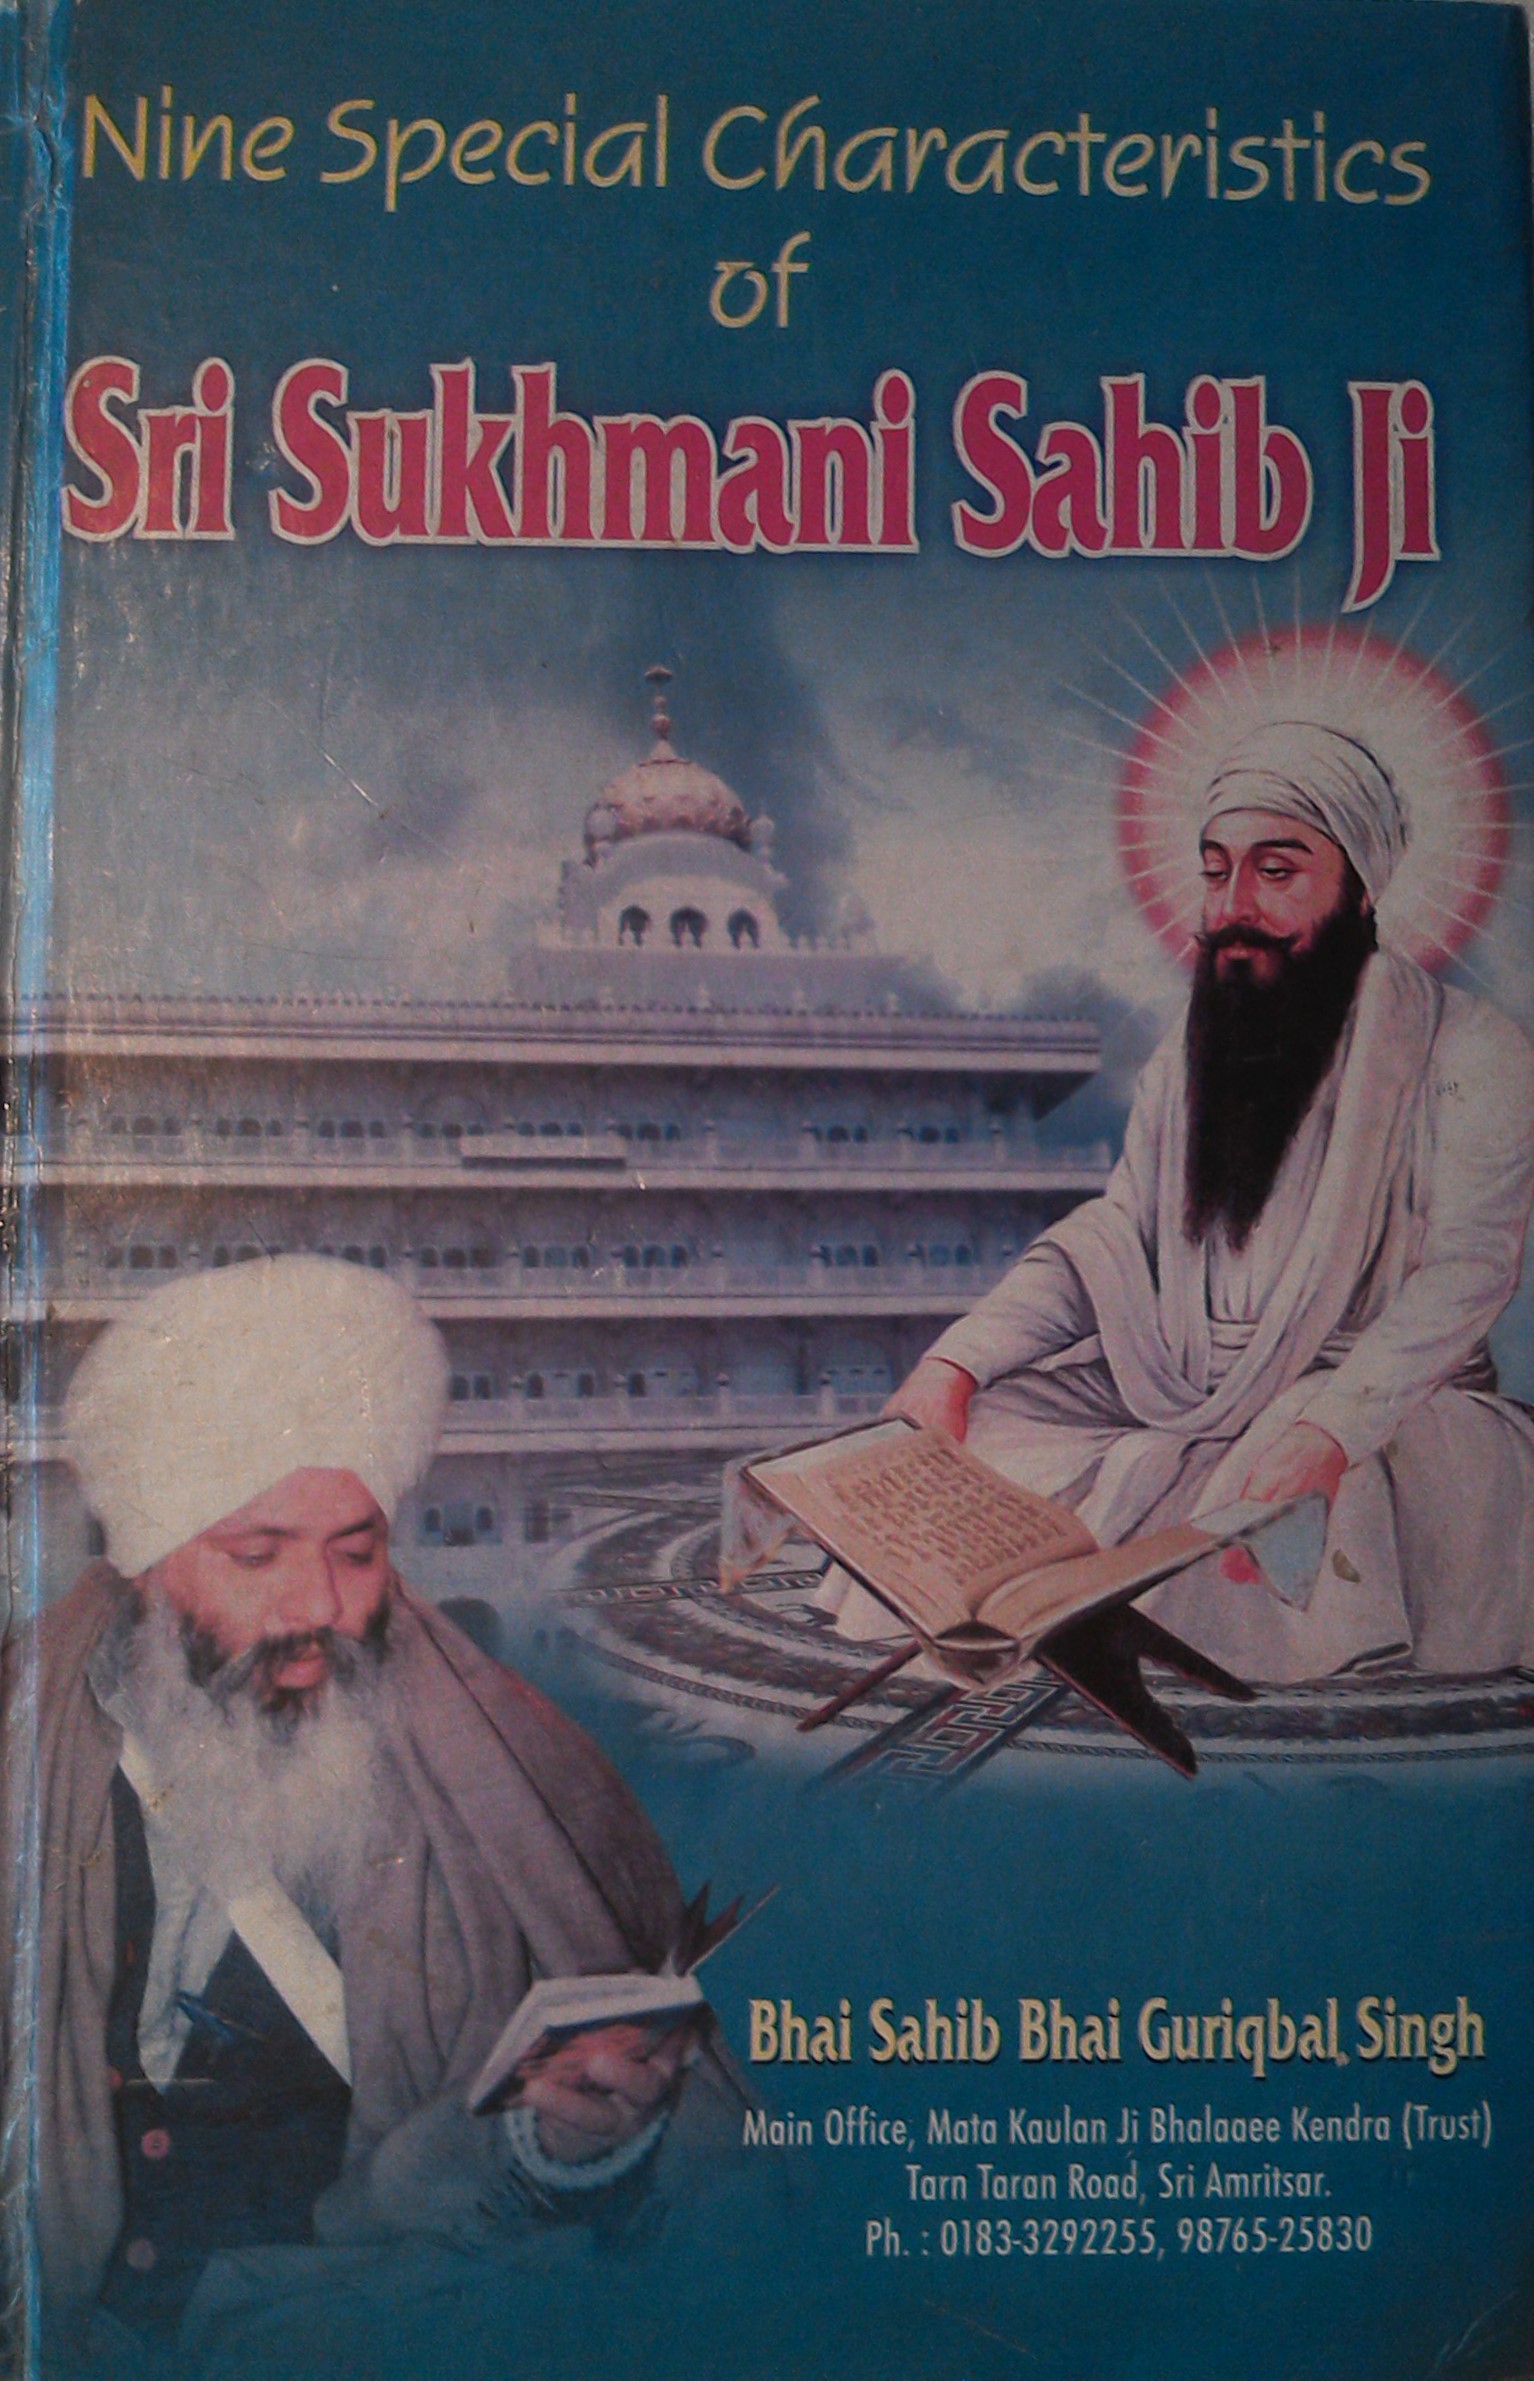 Sri Sukhmani Sahib Ji